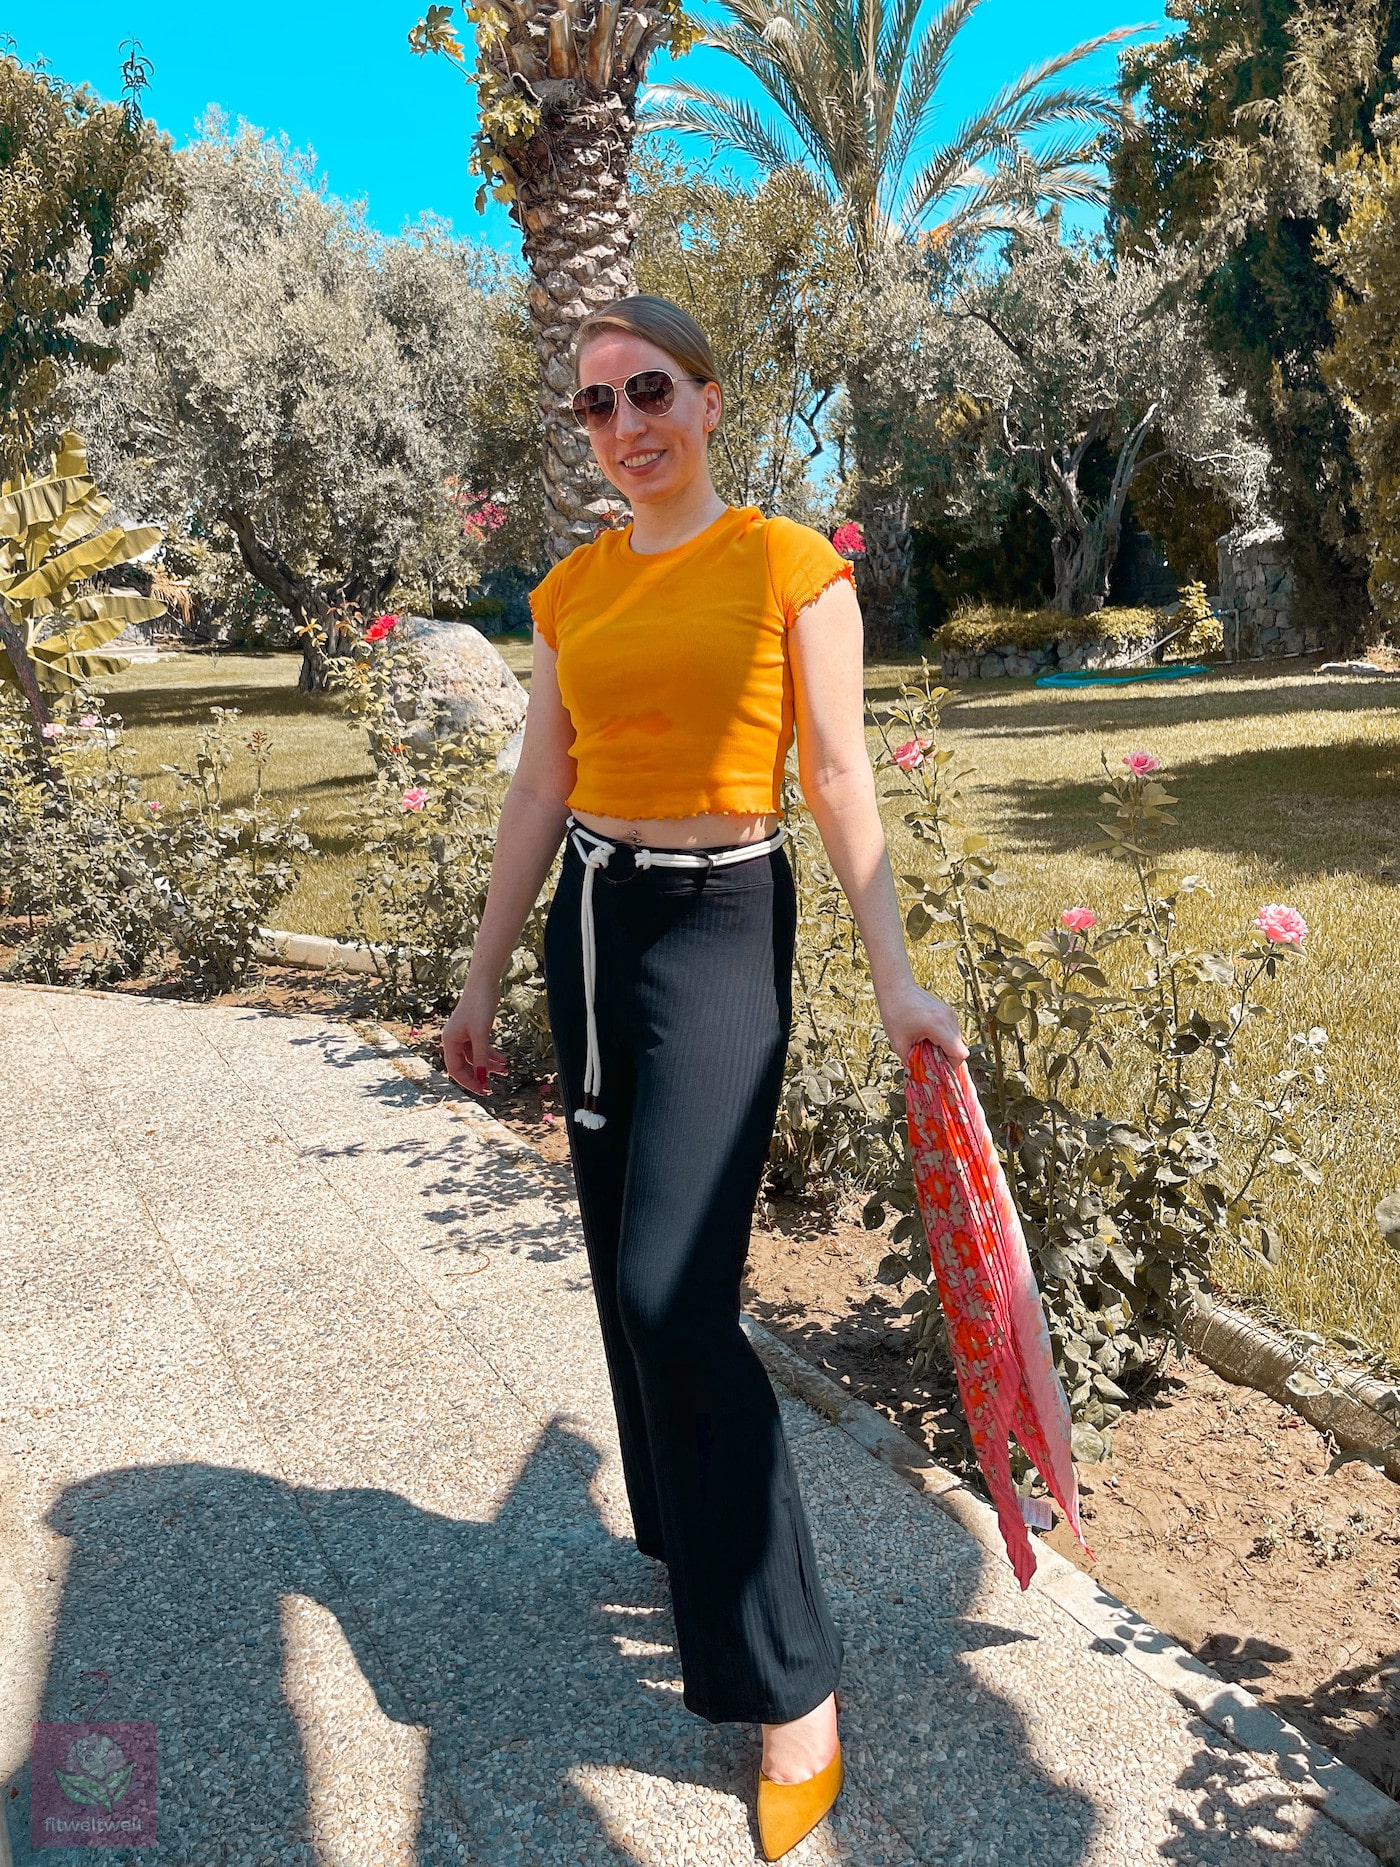 Claire Scarf The Lauren Pants Erfahrungen LES LUNES lockere Sommer Outfit Tuch gelb schwarz